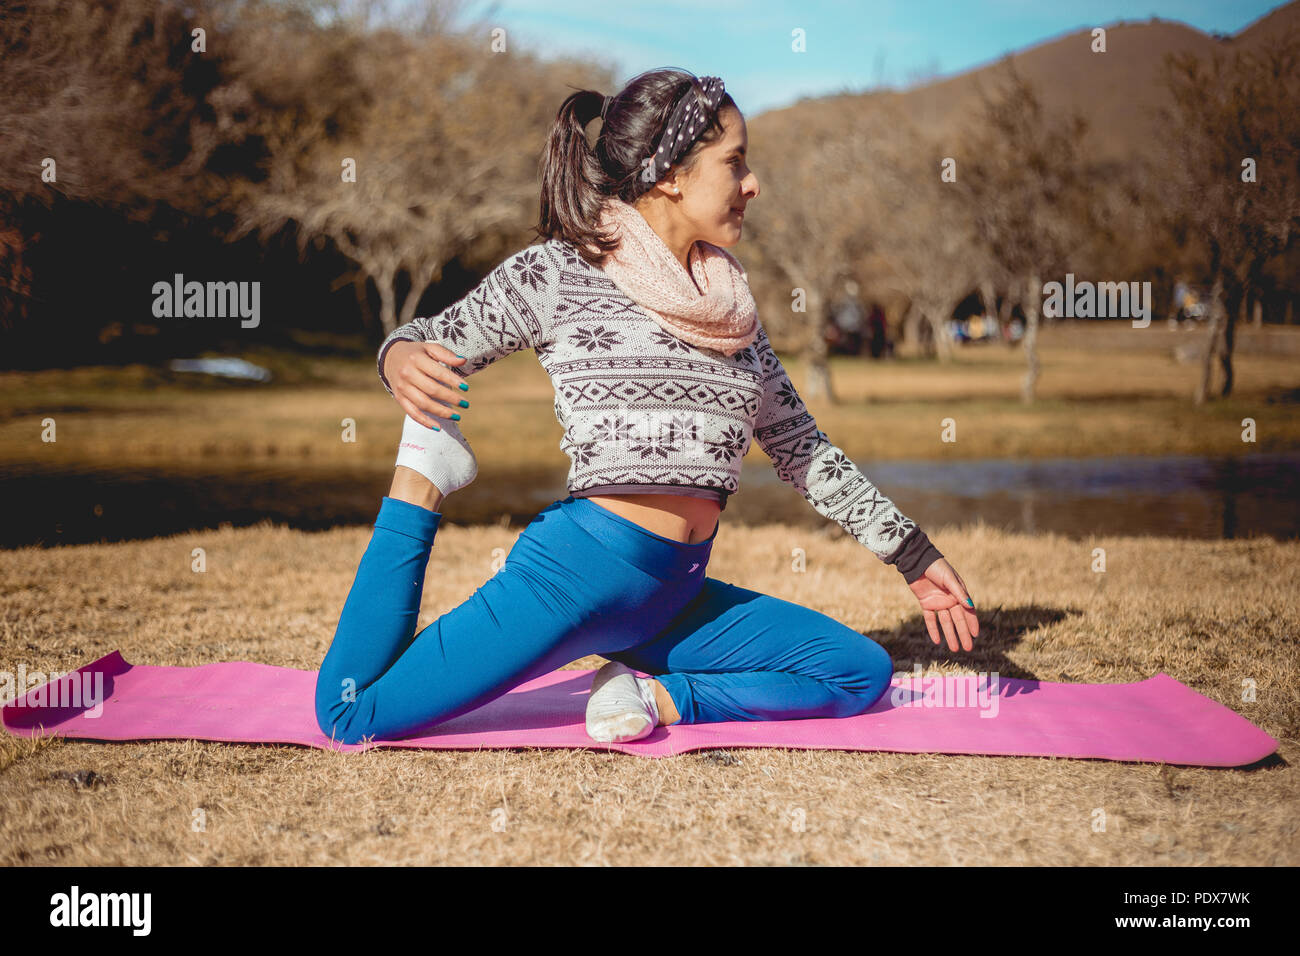 Girl doing Yoga in park Stock Photo